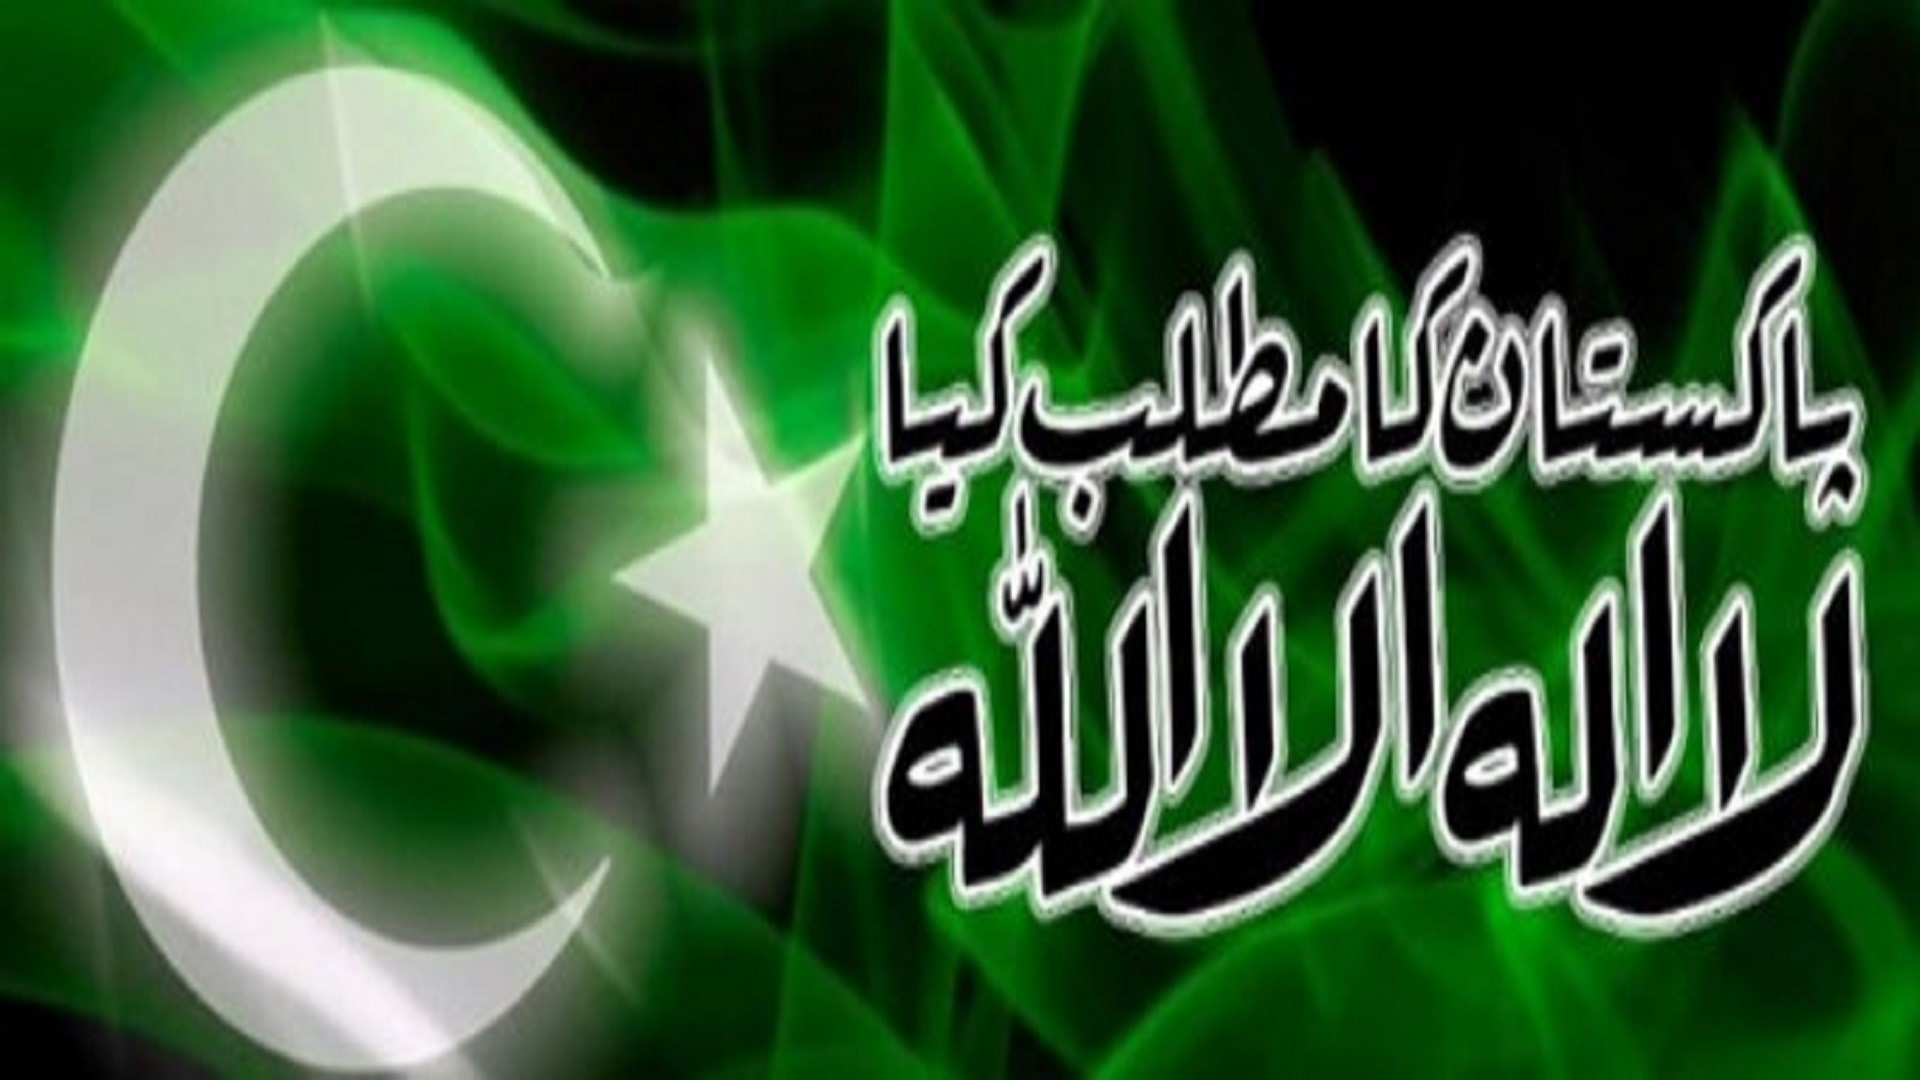 100 Free Pakistan Flag  Pakistan Images  Pixabay